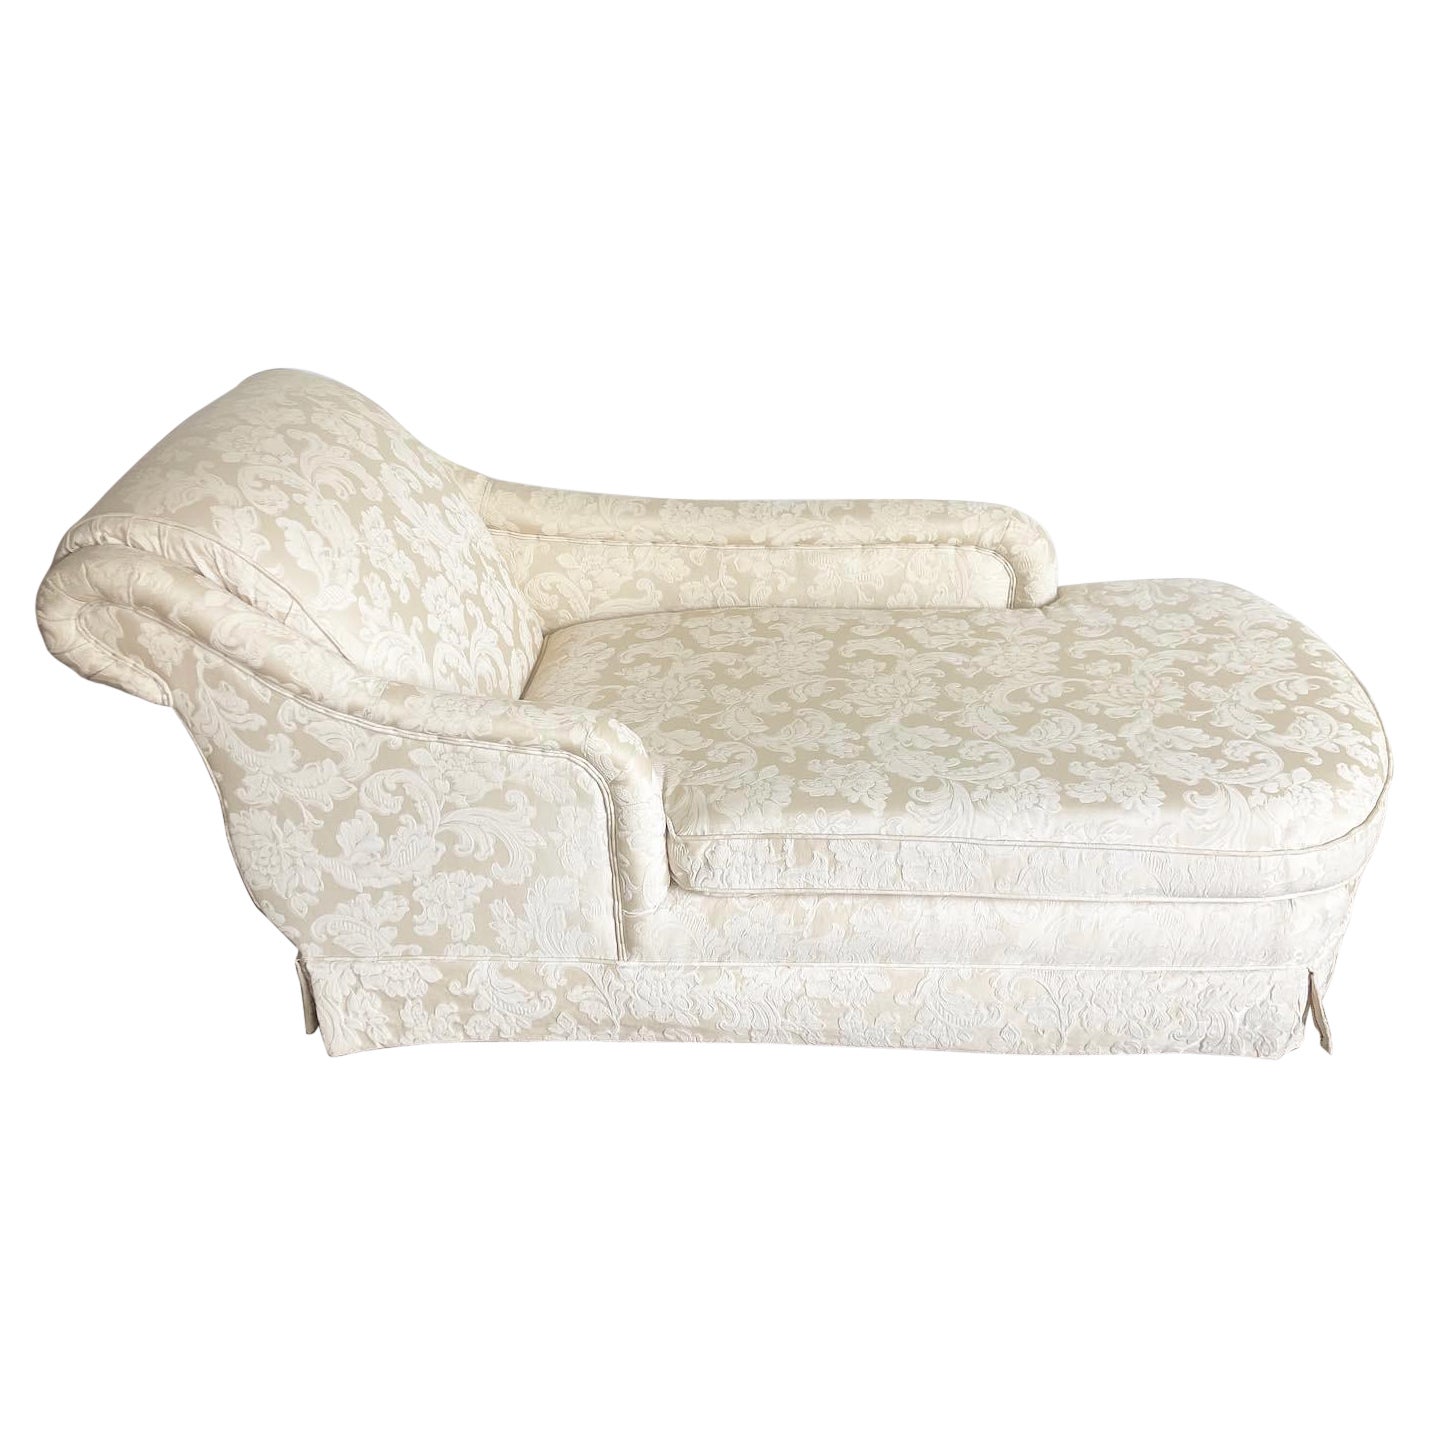 Regency Cream Fabric Chaise Lounge